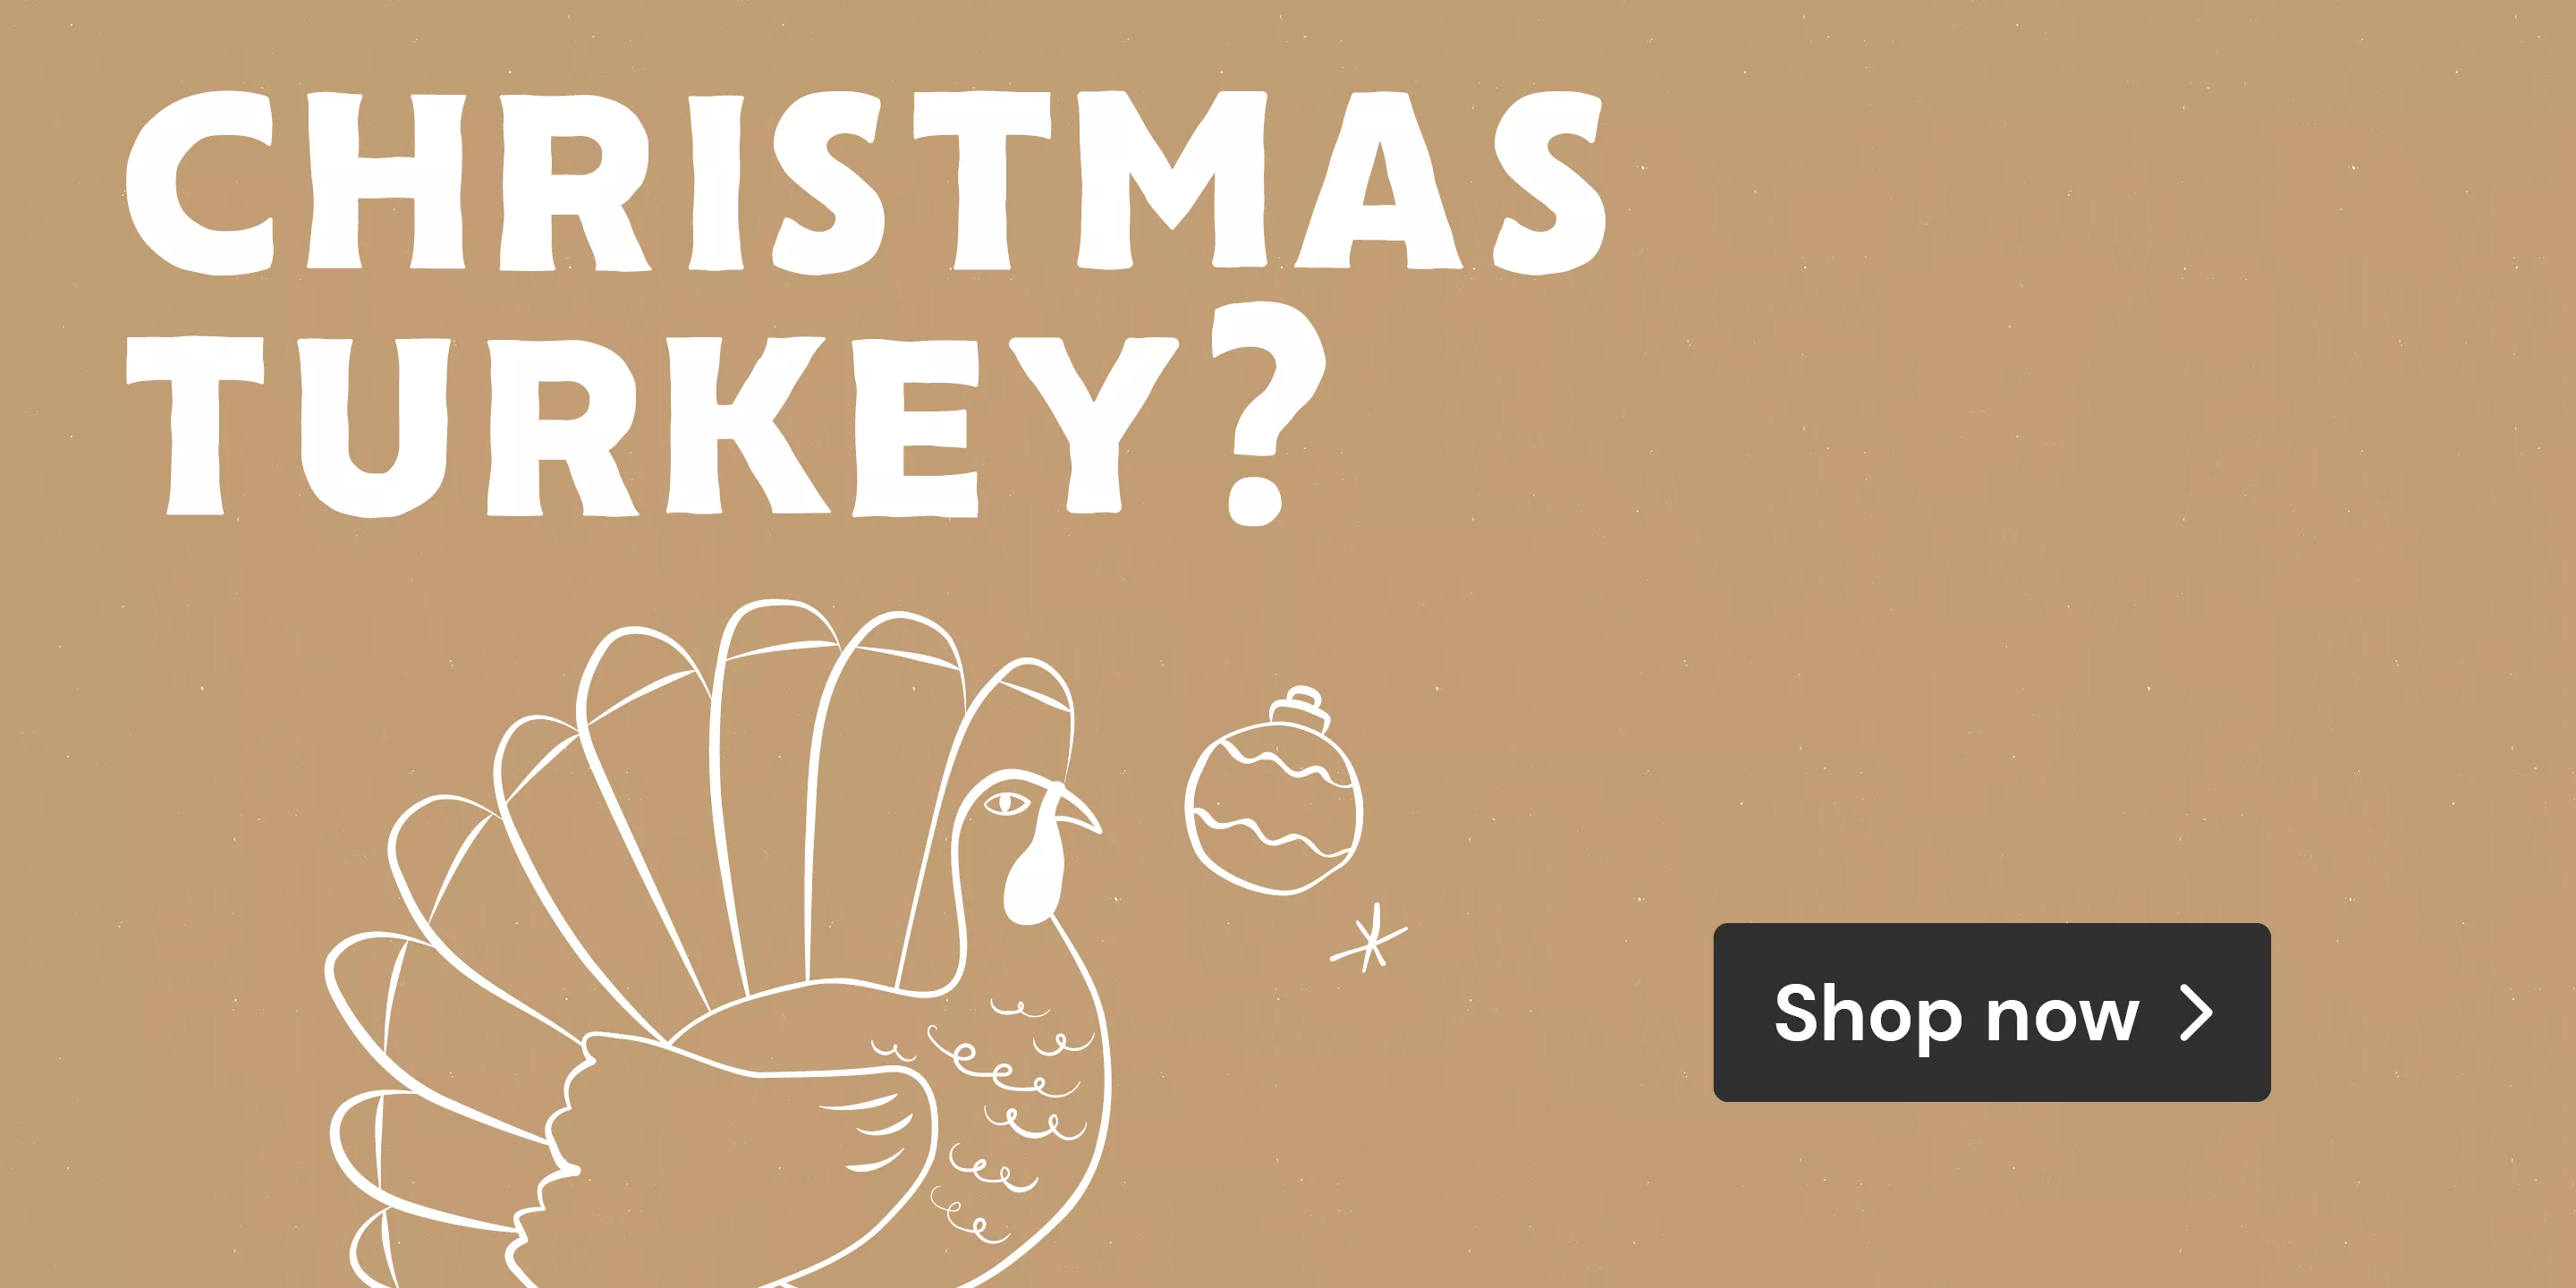 Christmas Turkey? Shop now